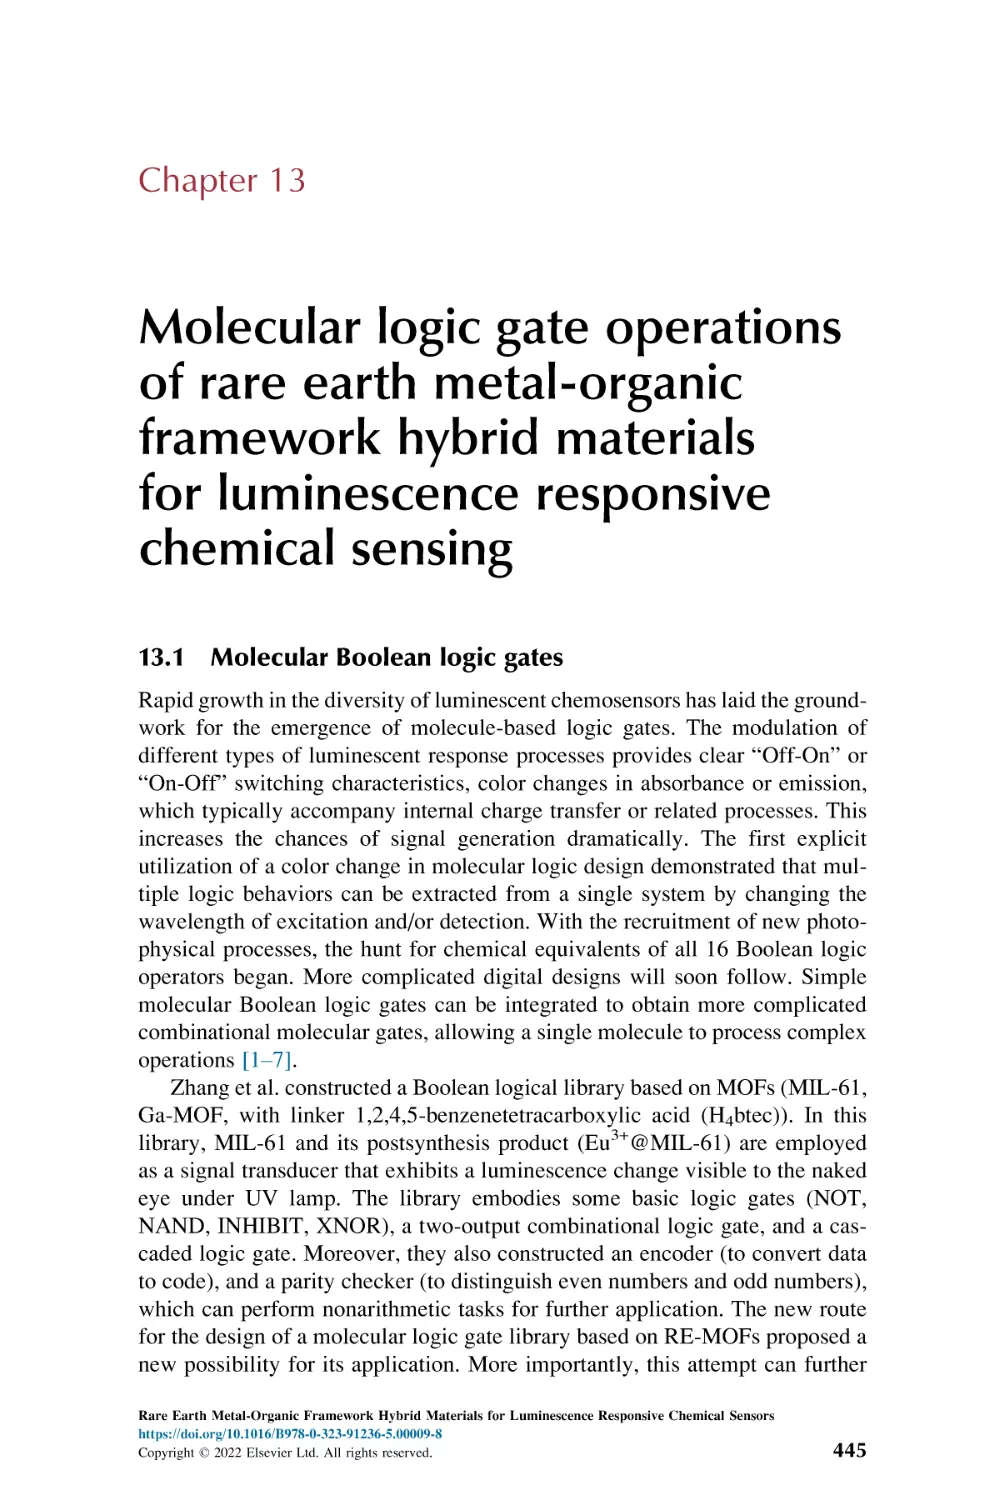 Chapter 13
13.1. Molecular Boolean logic gates